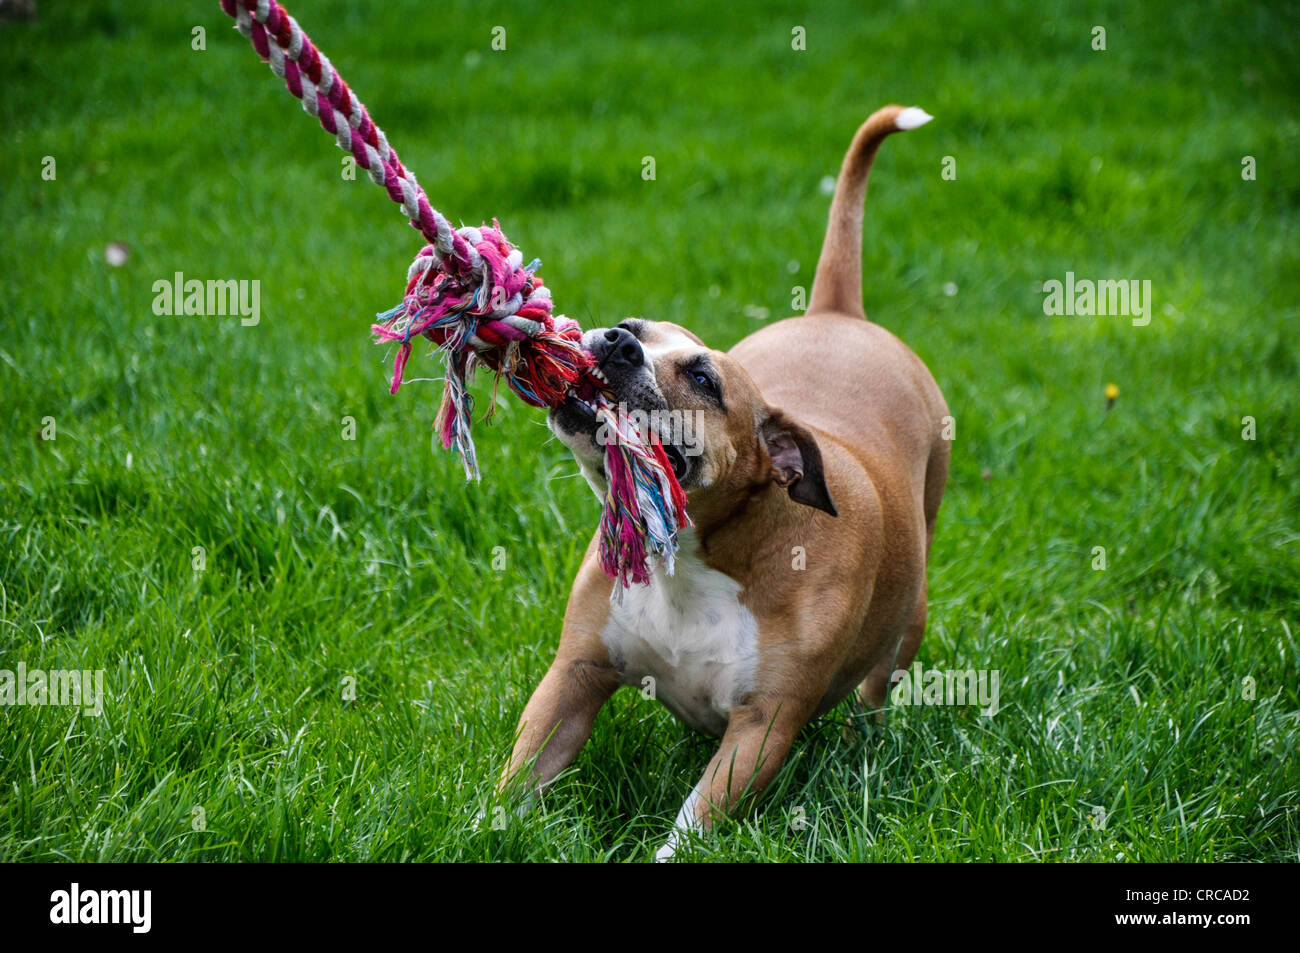 dog pull rope